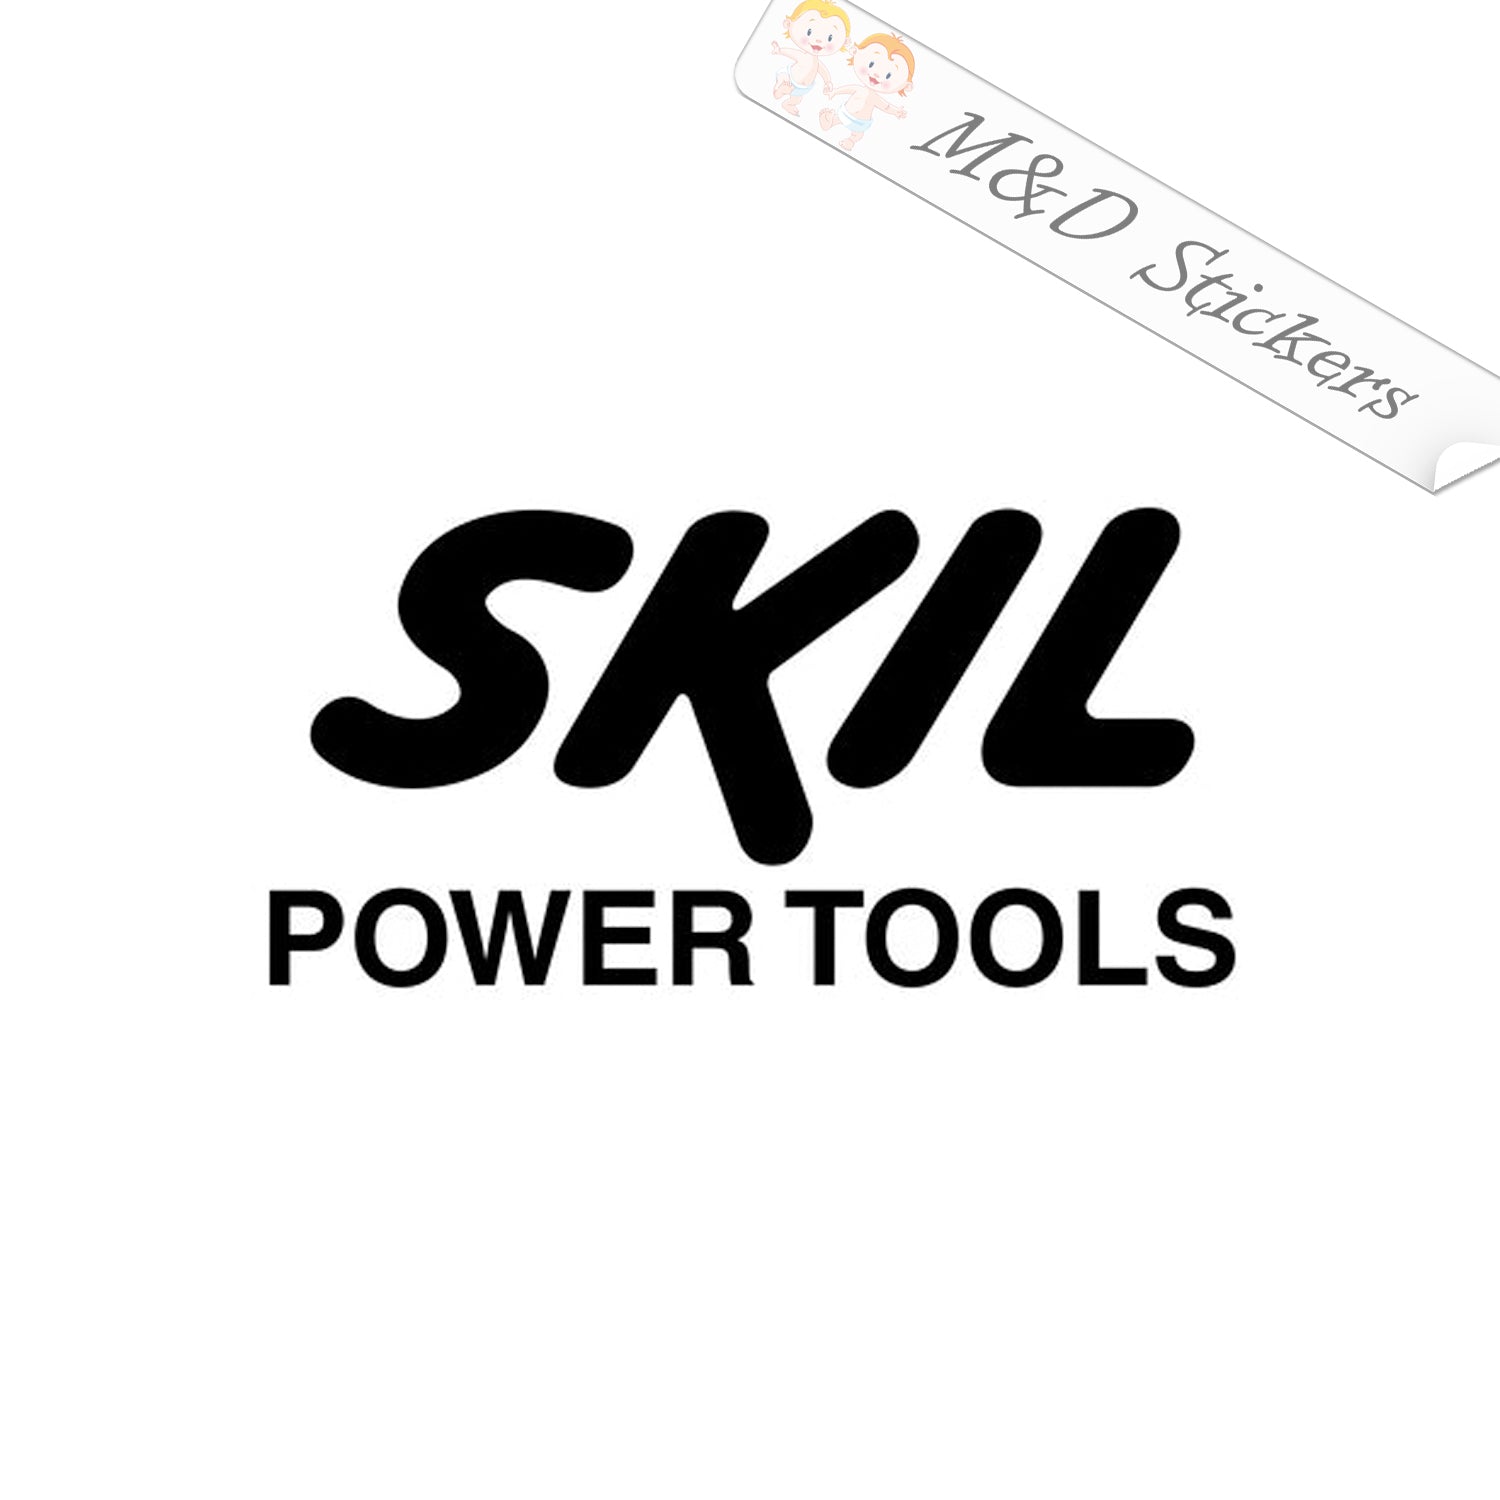 Power tool car logo simple gray style Royalty Free Vector